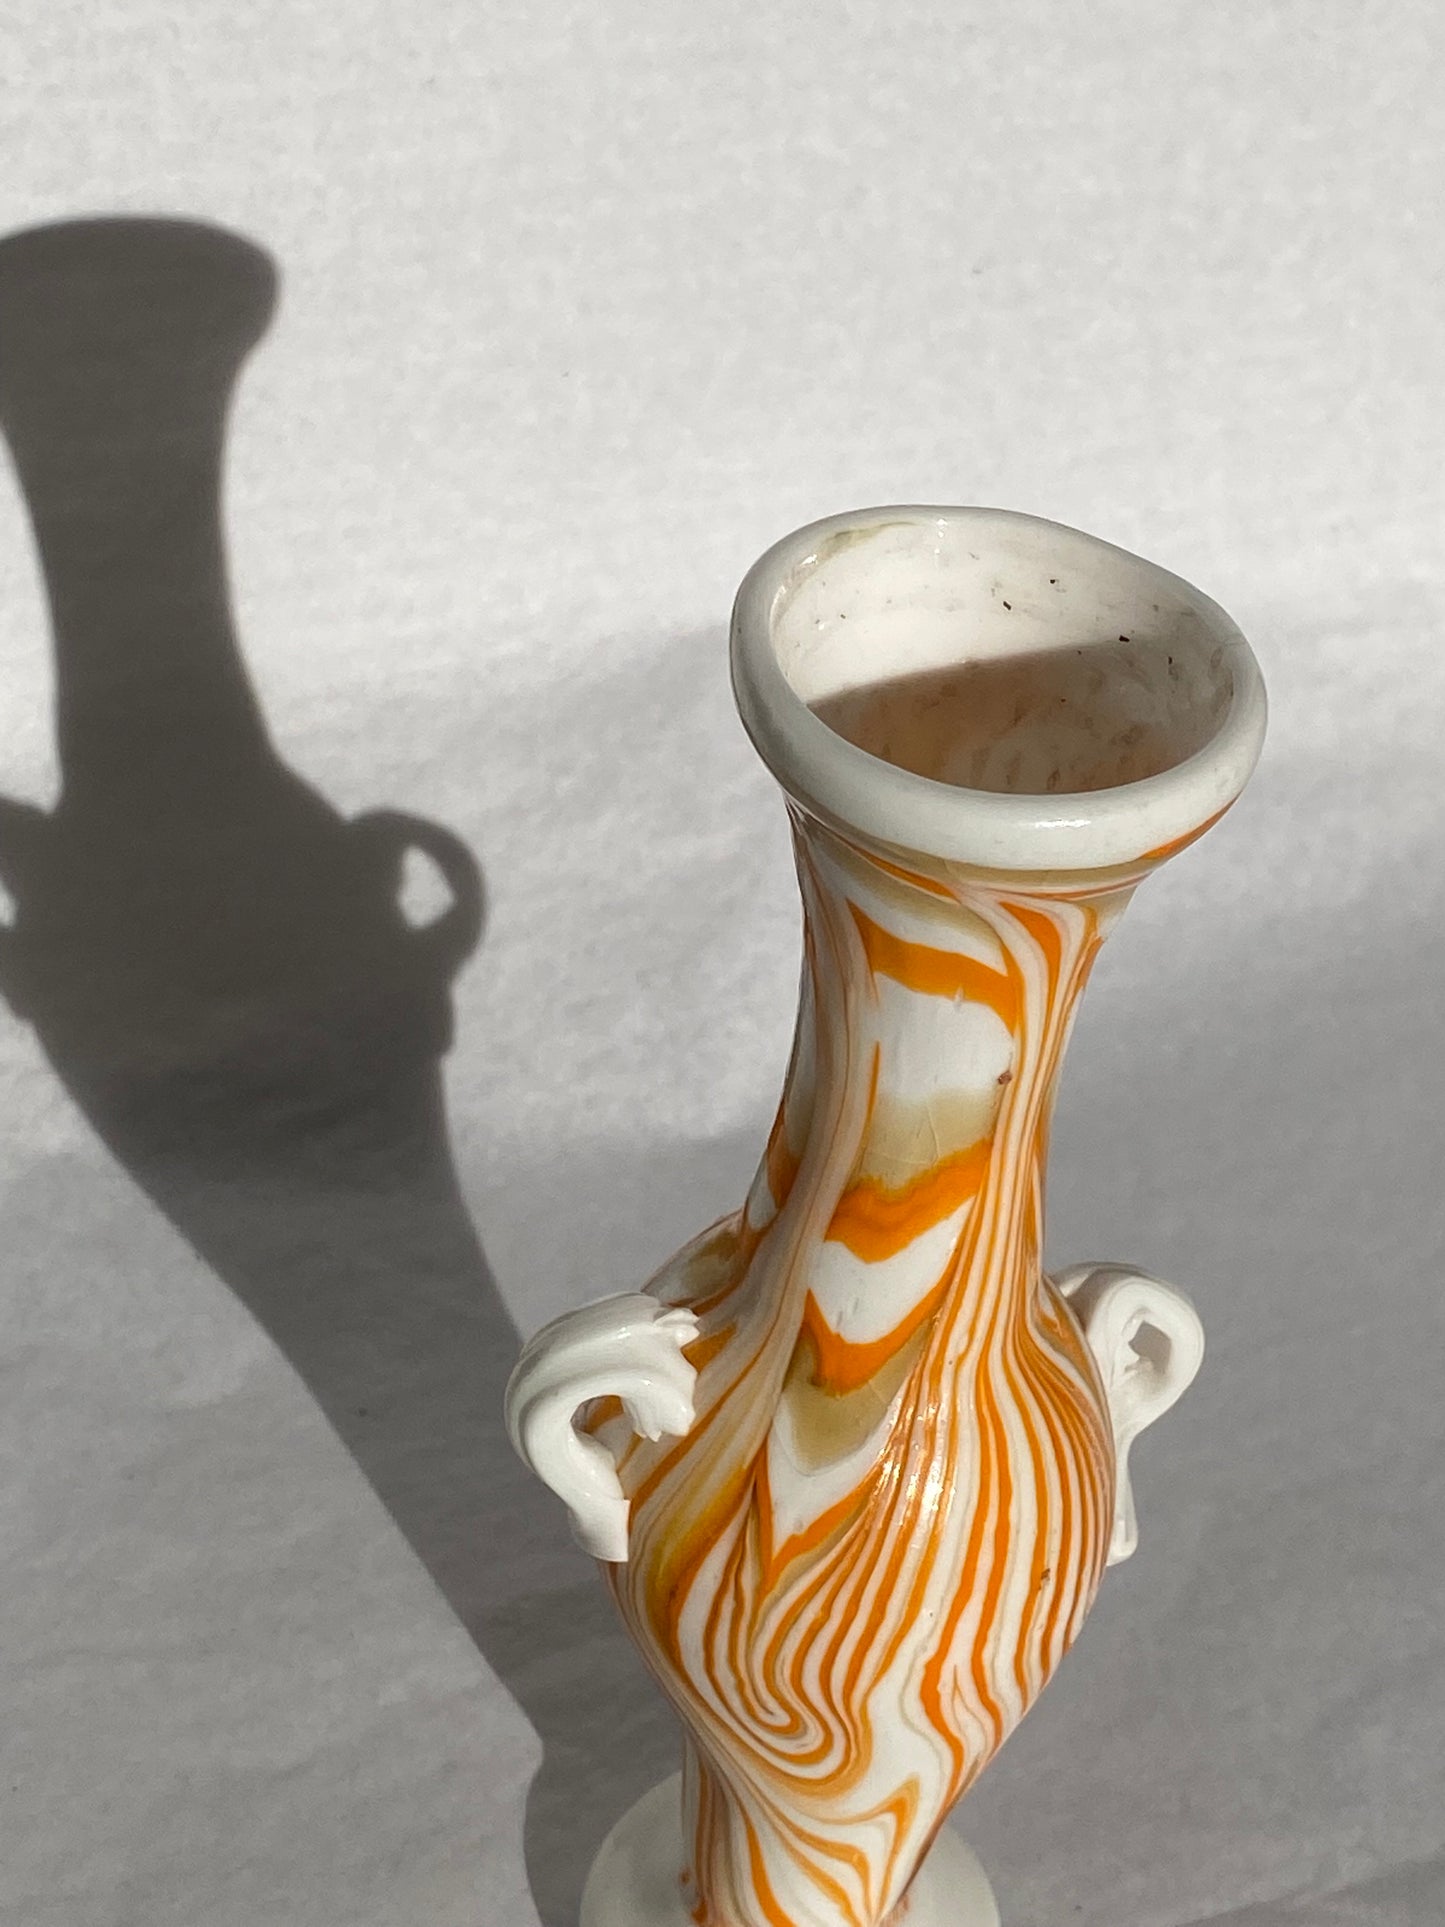 Phoenician glass vase - white and orange